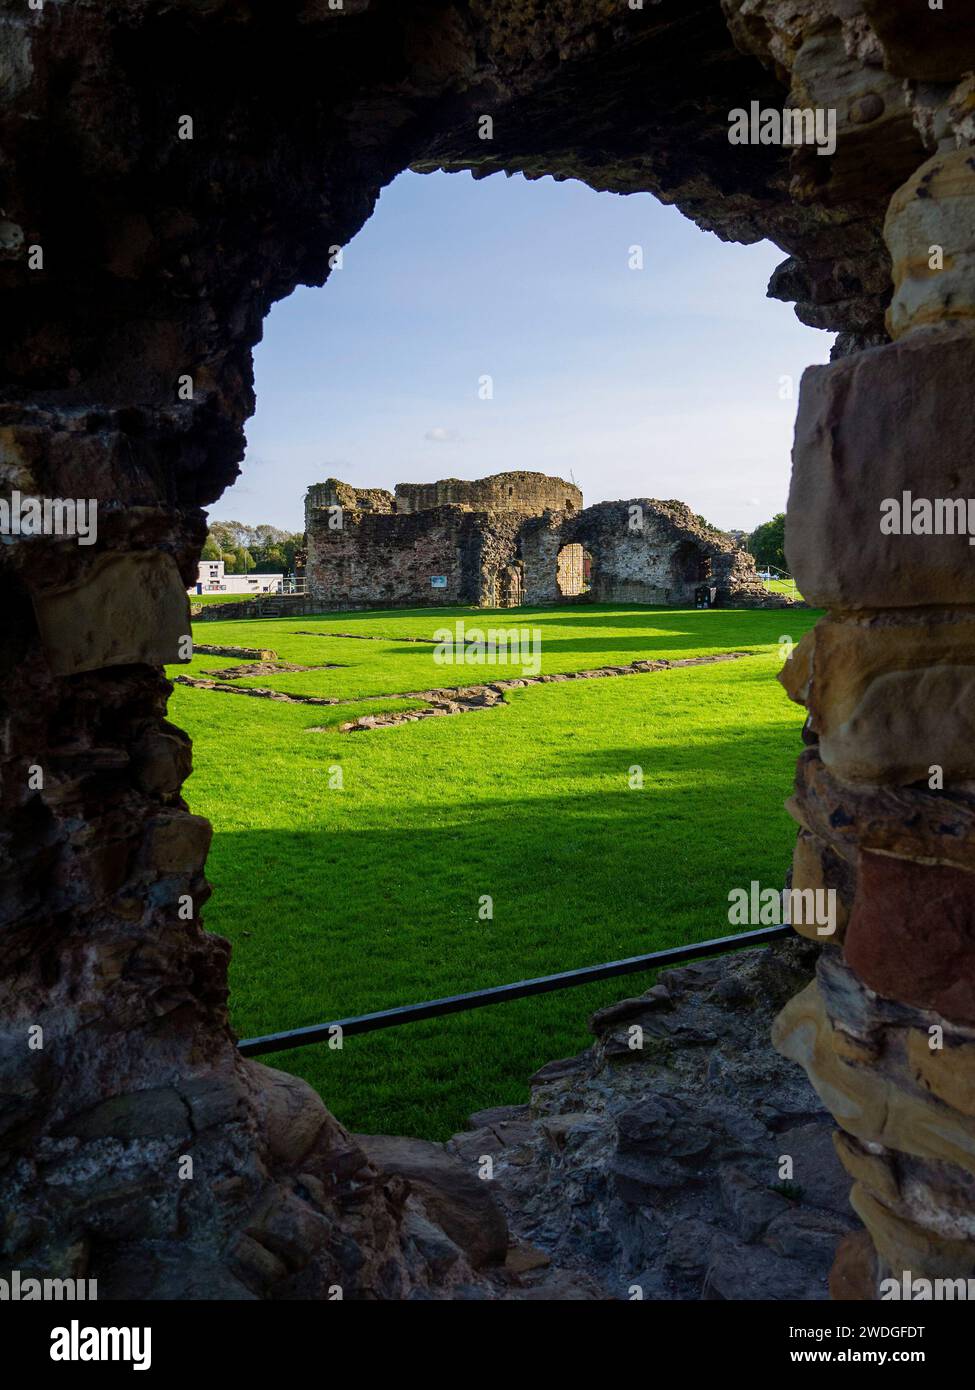 A view of Flint Castle ruins through a degraded interior arrow-slit window, Flint, Flintshire, Wales, UK Stock Photo